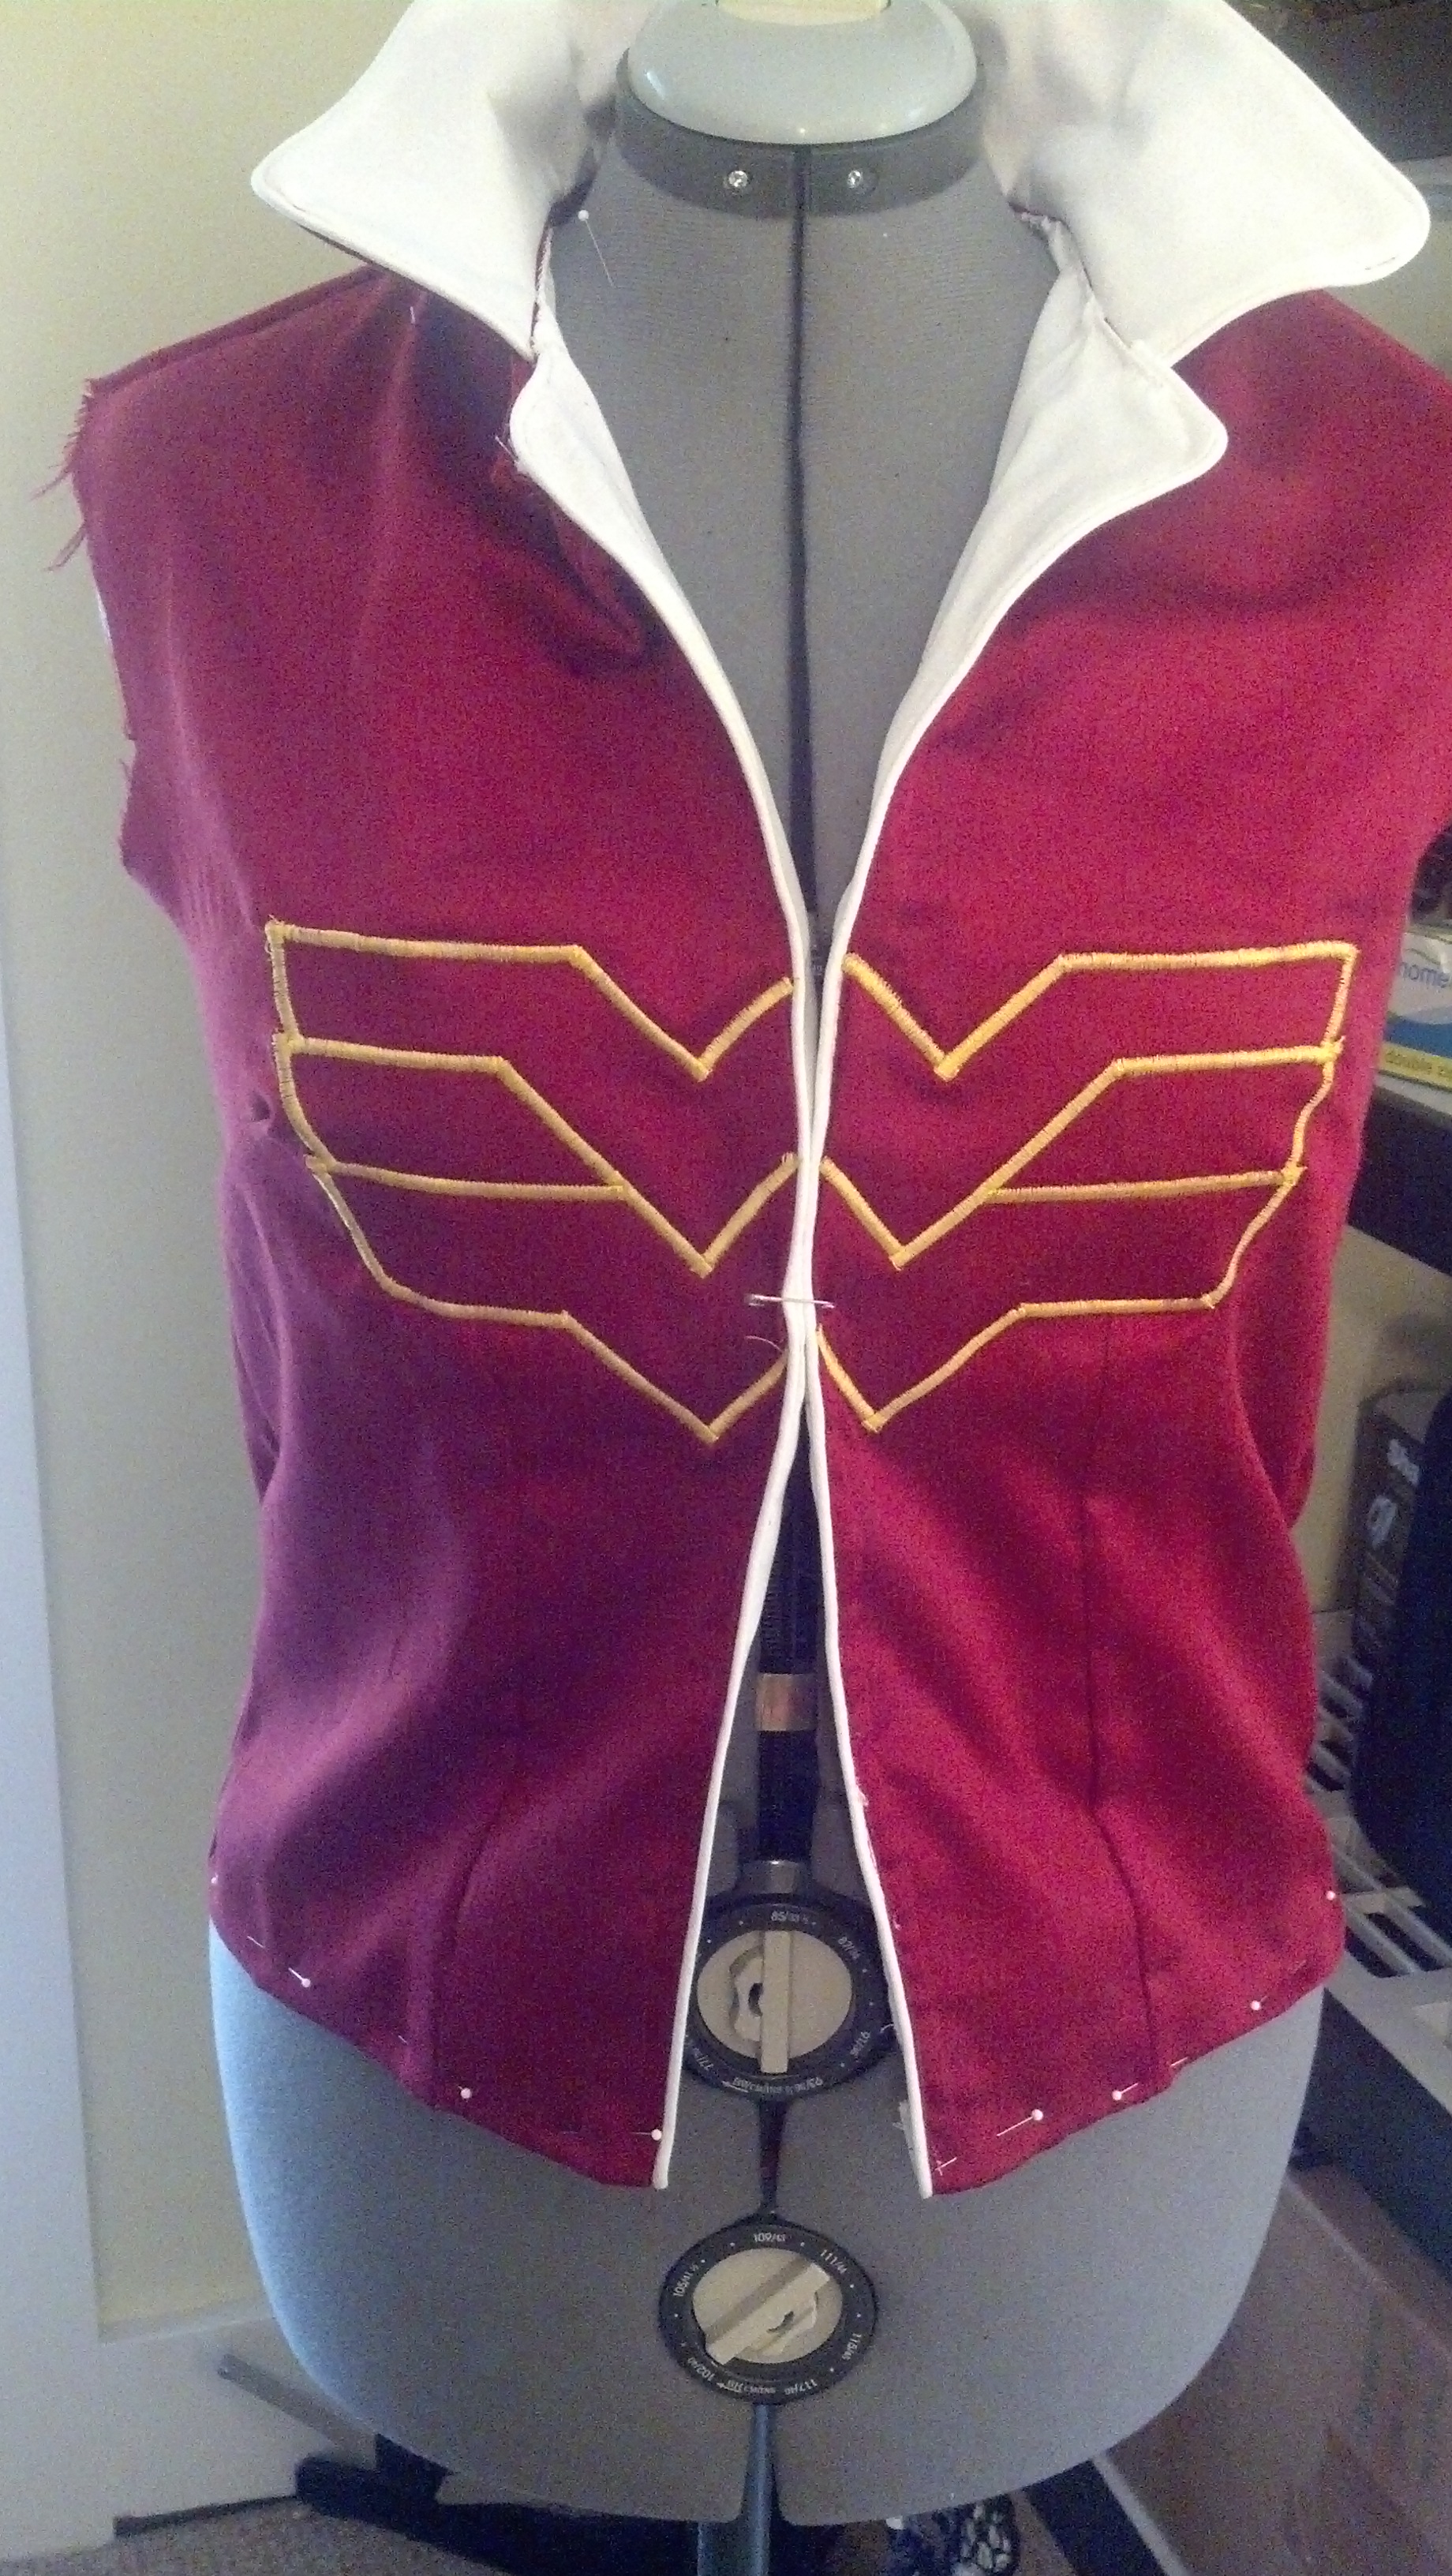 Bombshell Wonder Woman Costume 2013